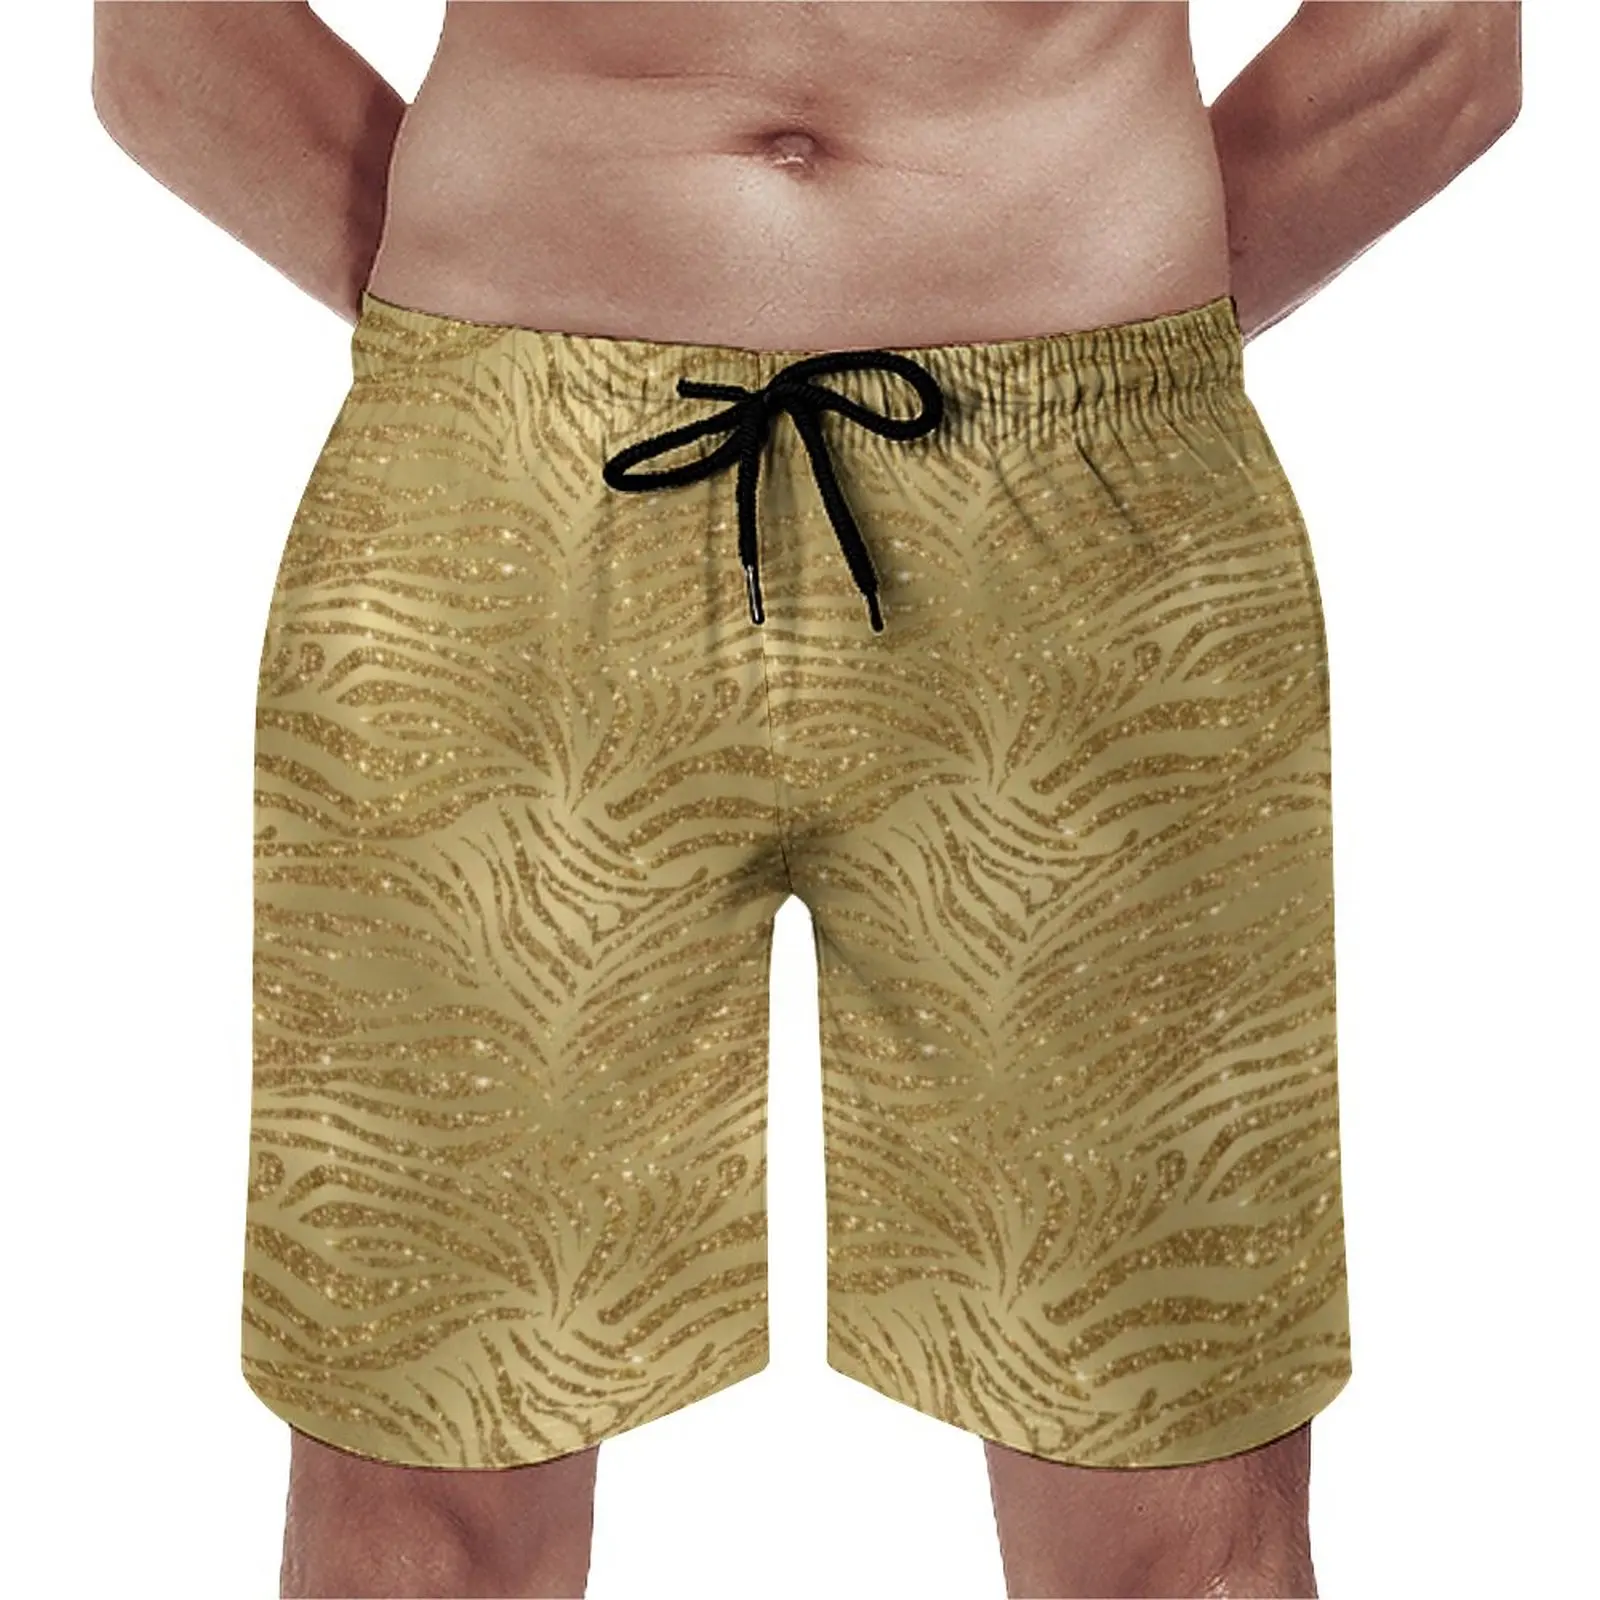 

Sparkle Tiger Print Board Shorts Summer Gold Glitter Stripes Retro Beach Shorts Man Sportswear Comfortable Printed Swim Trunks